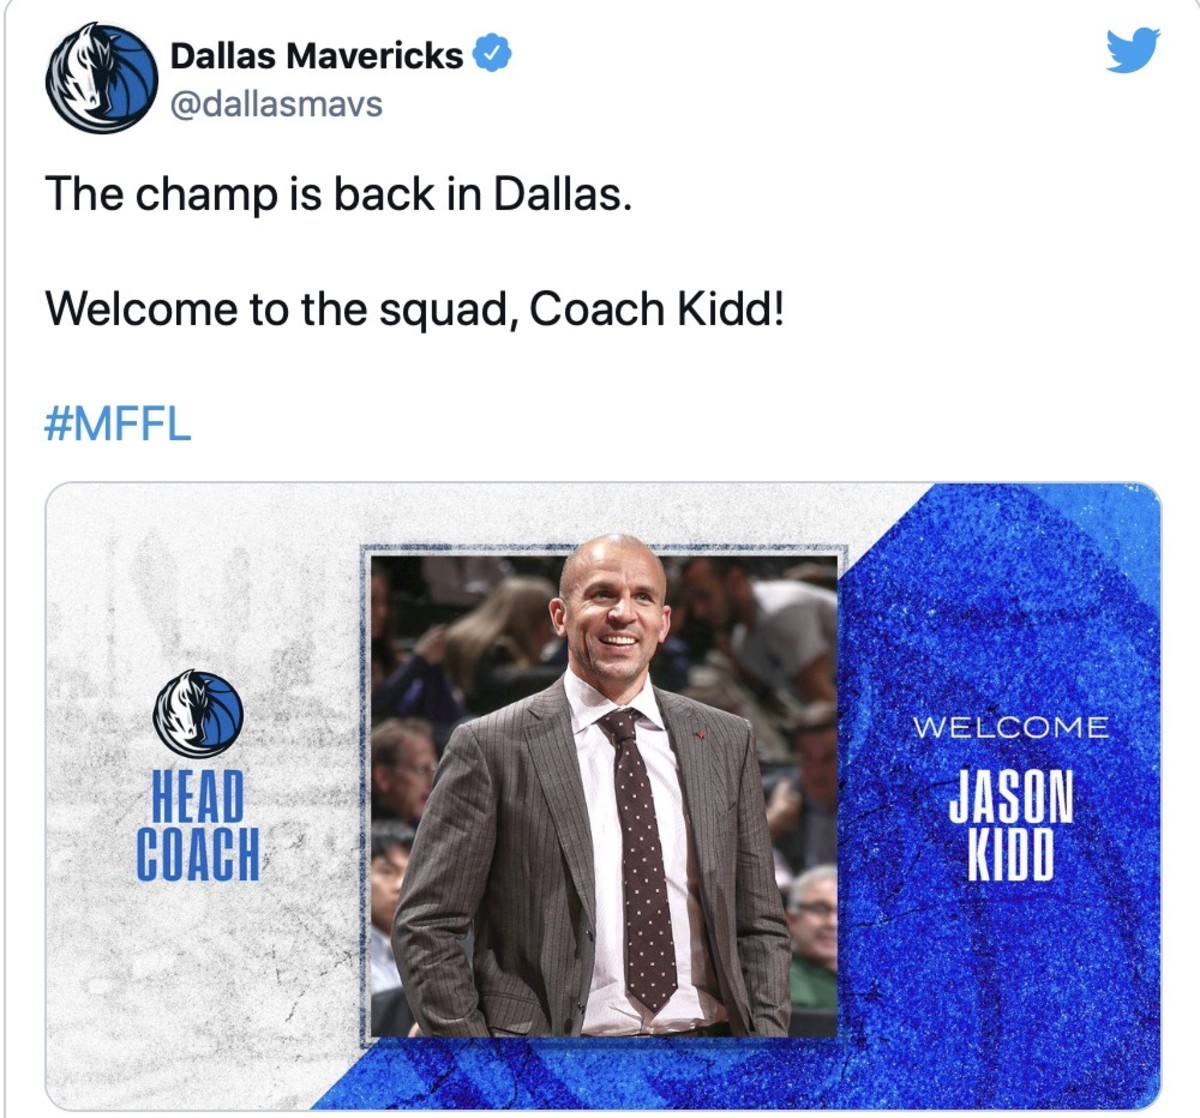 Dallas Mavericks introduce Jason Kidd as new head coach